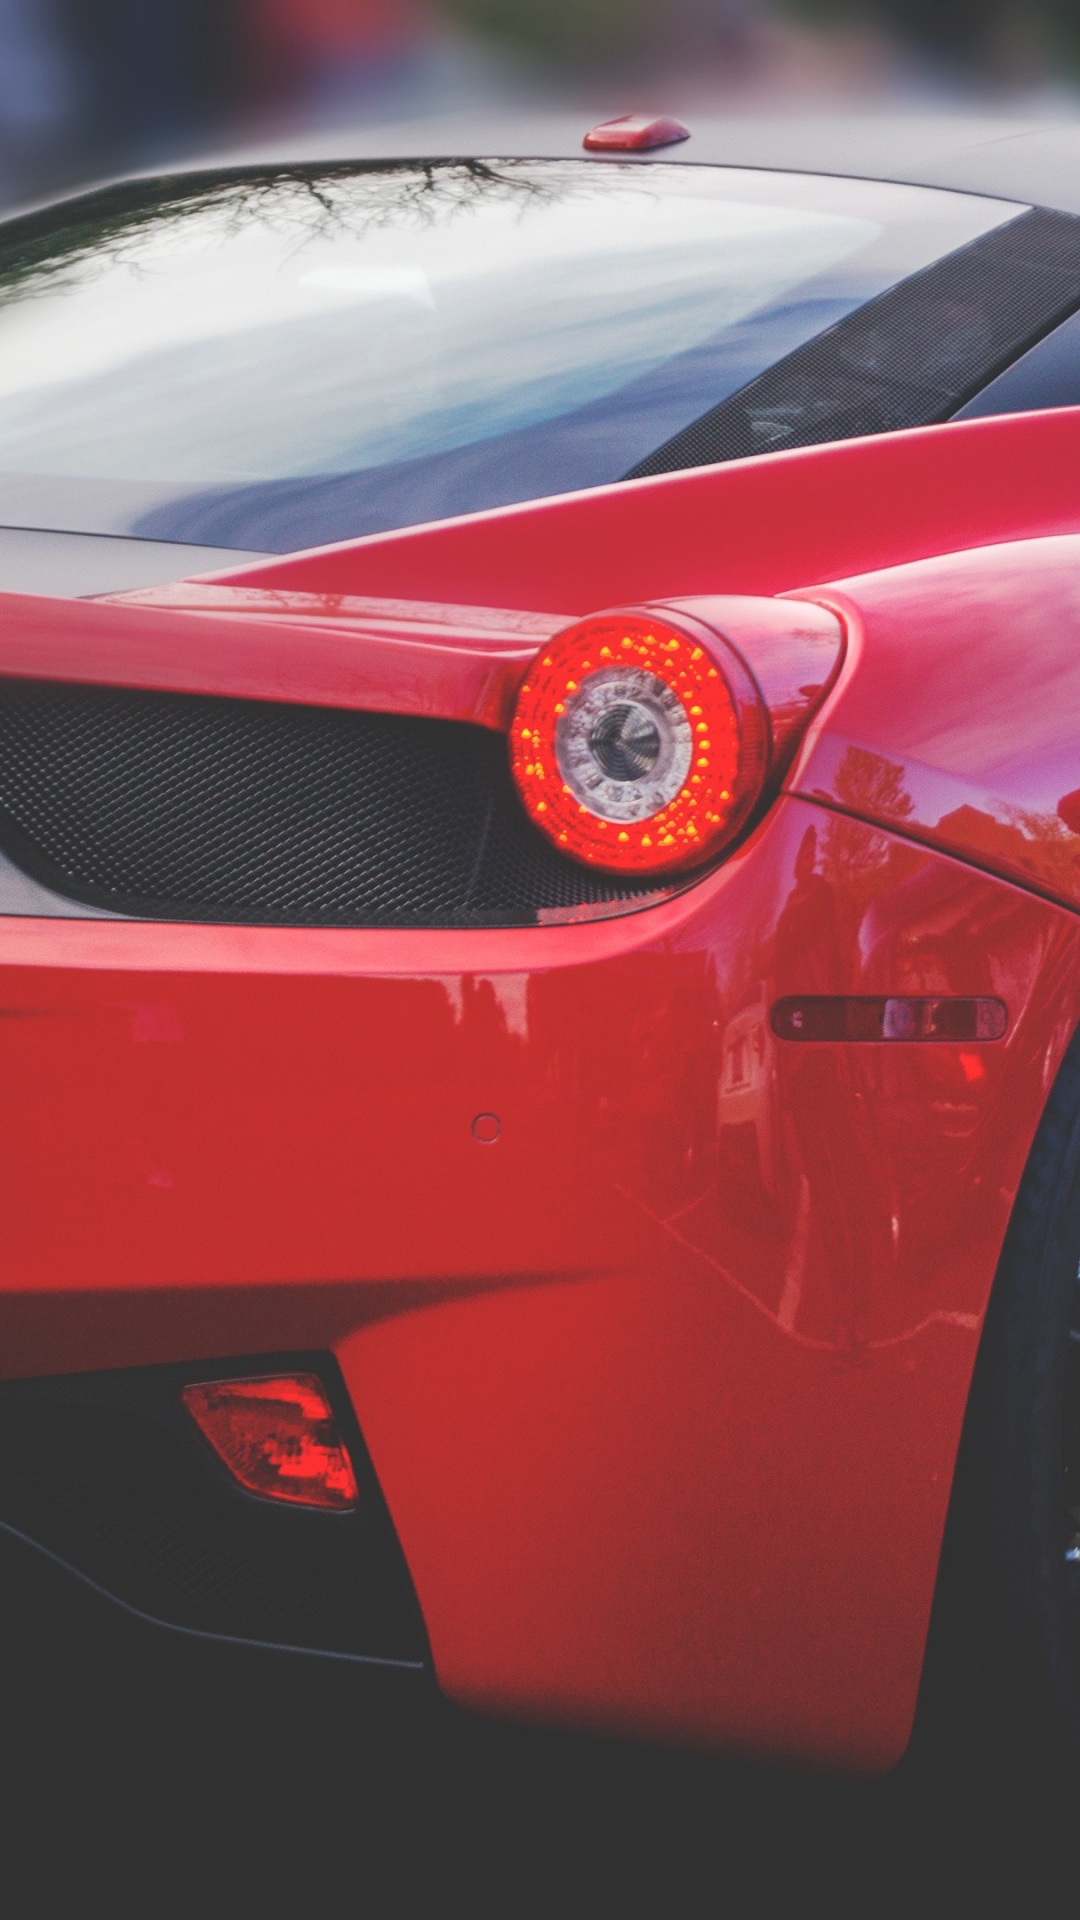 Ferrari Rojo 458 Italia en la Carretera. Wallpaper in 1080x1920 Resolution